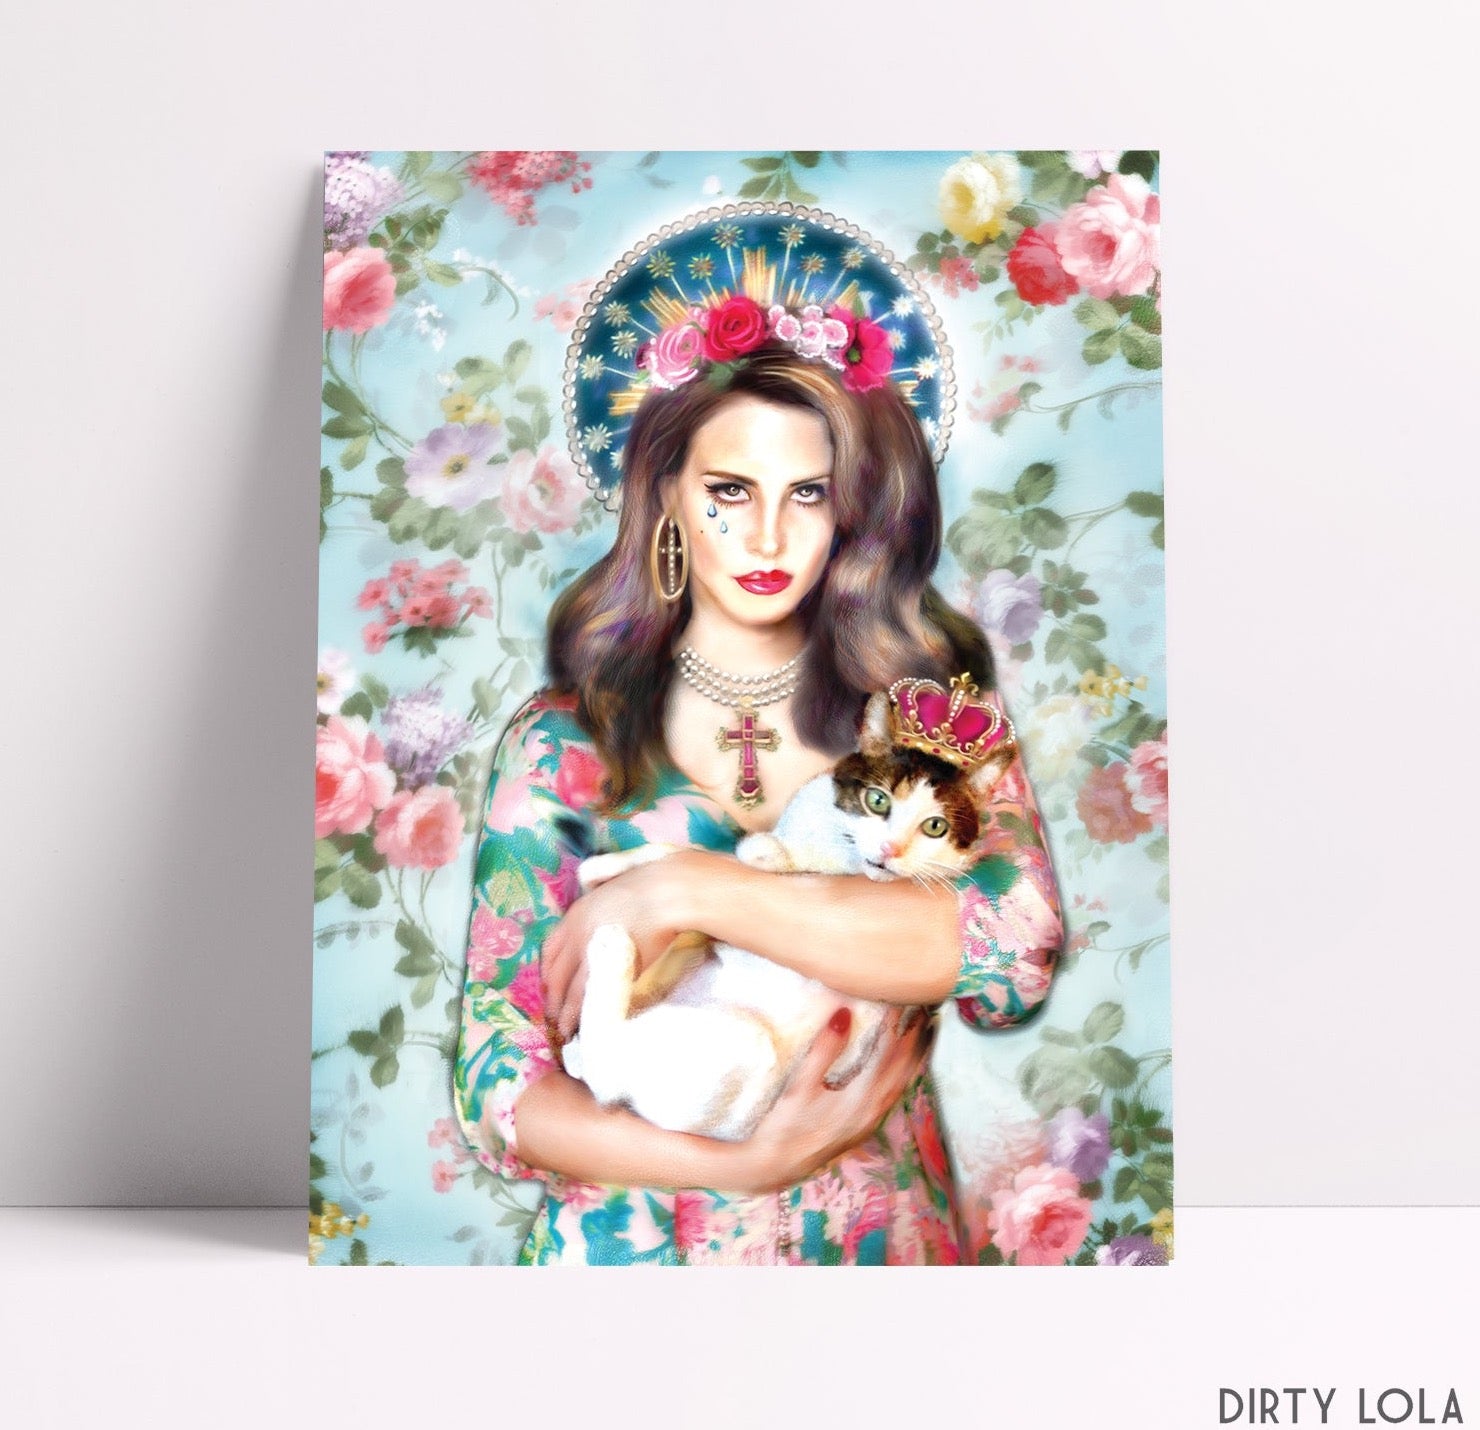 Our Lady Del Rey Art Print